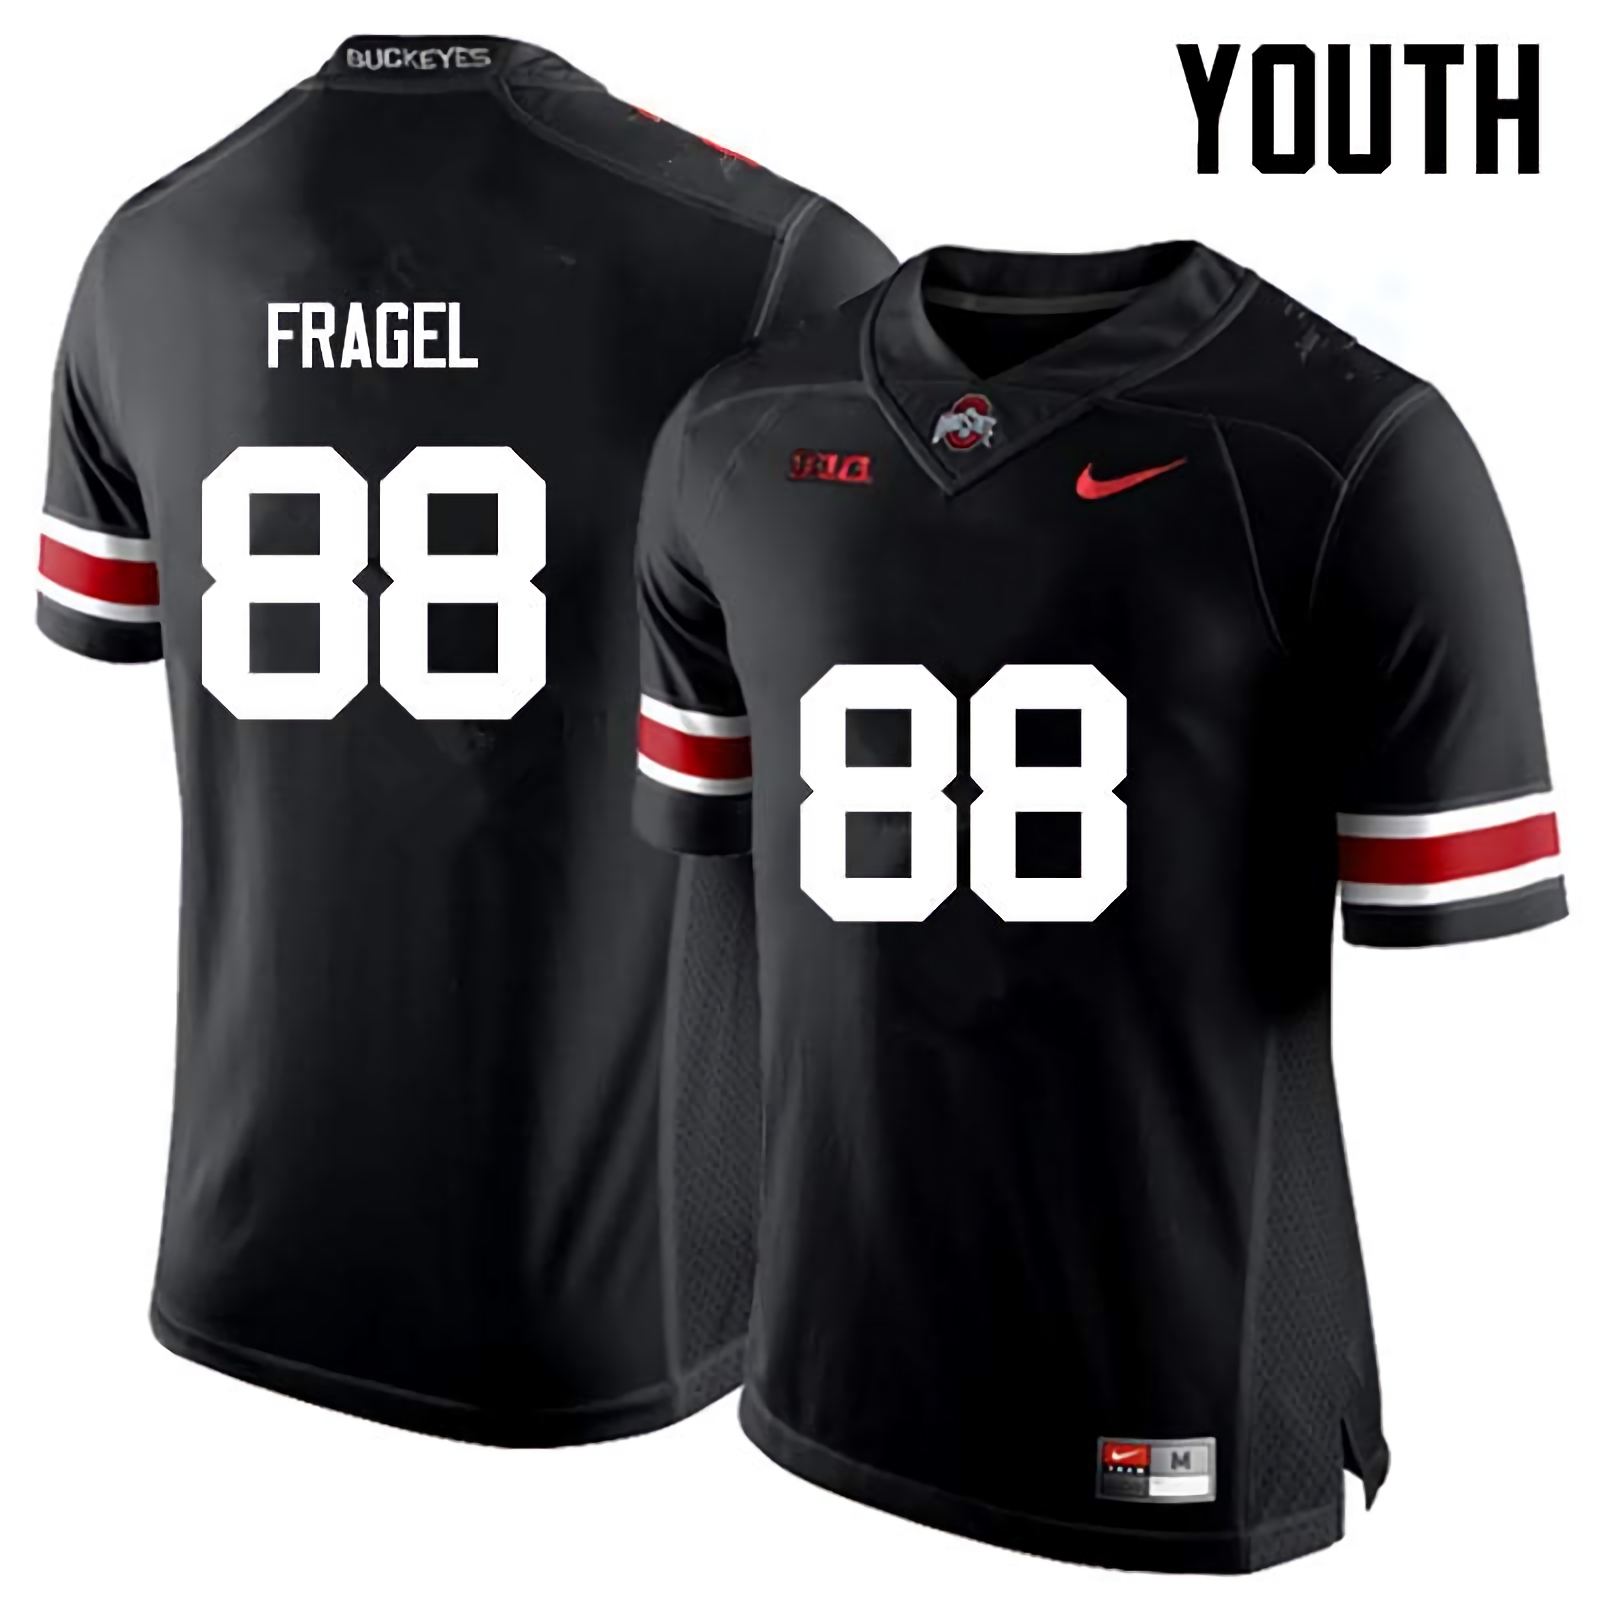 Reid Fragel Ohio State Buckeyes Youth NCAA #88 Nike Black College Stitched Football Jersey OOJ0556MJ